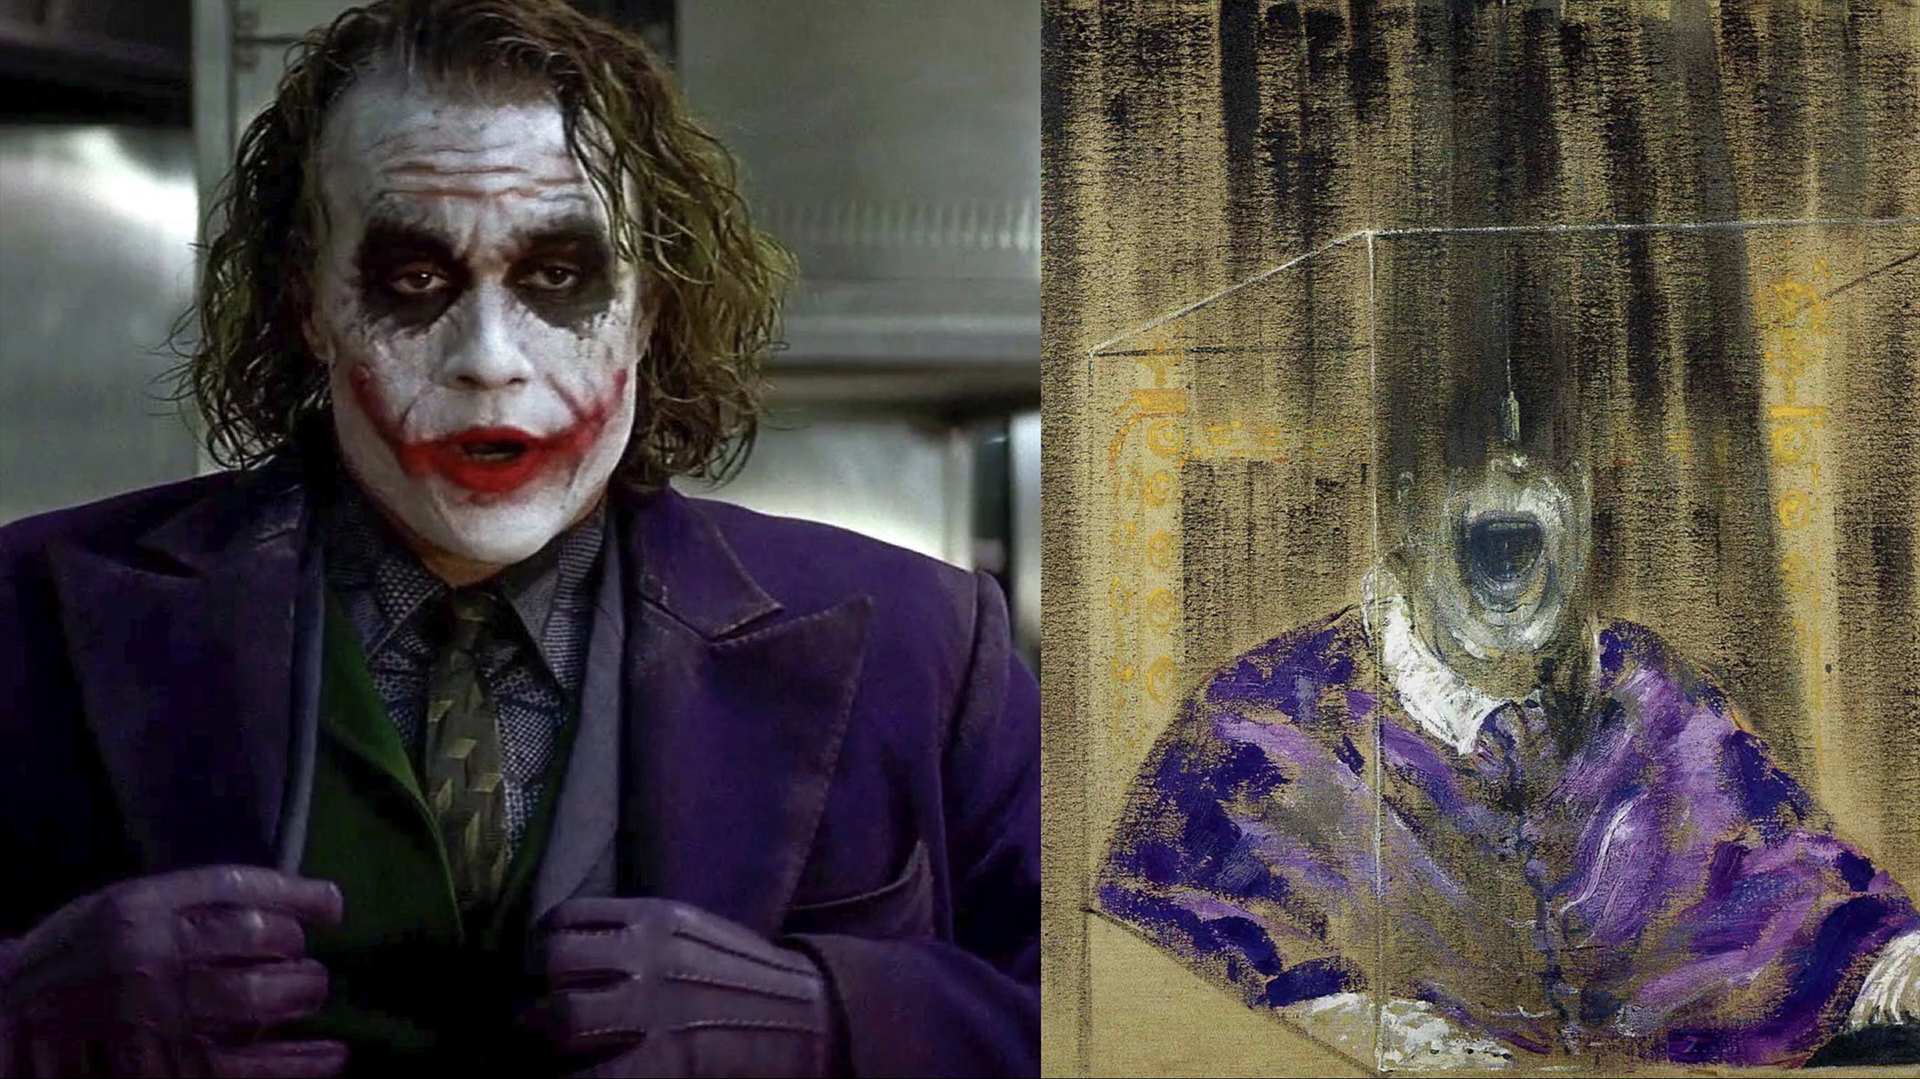 visual subtext - the makeup of Joker